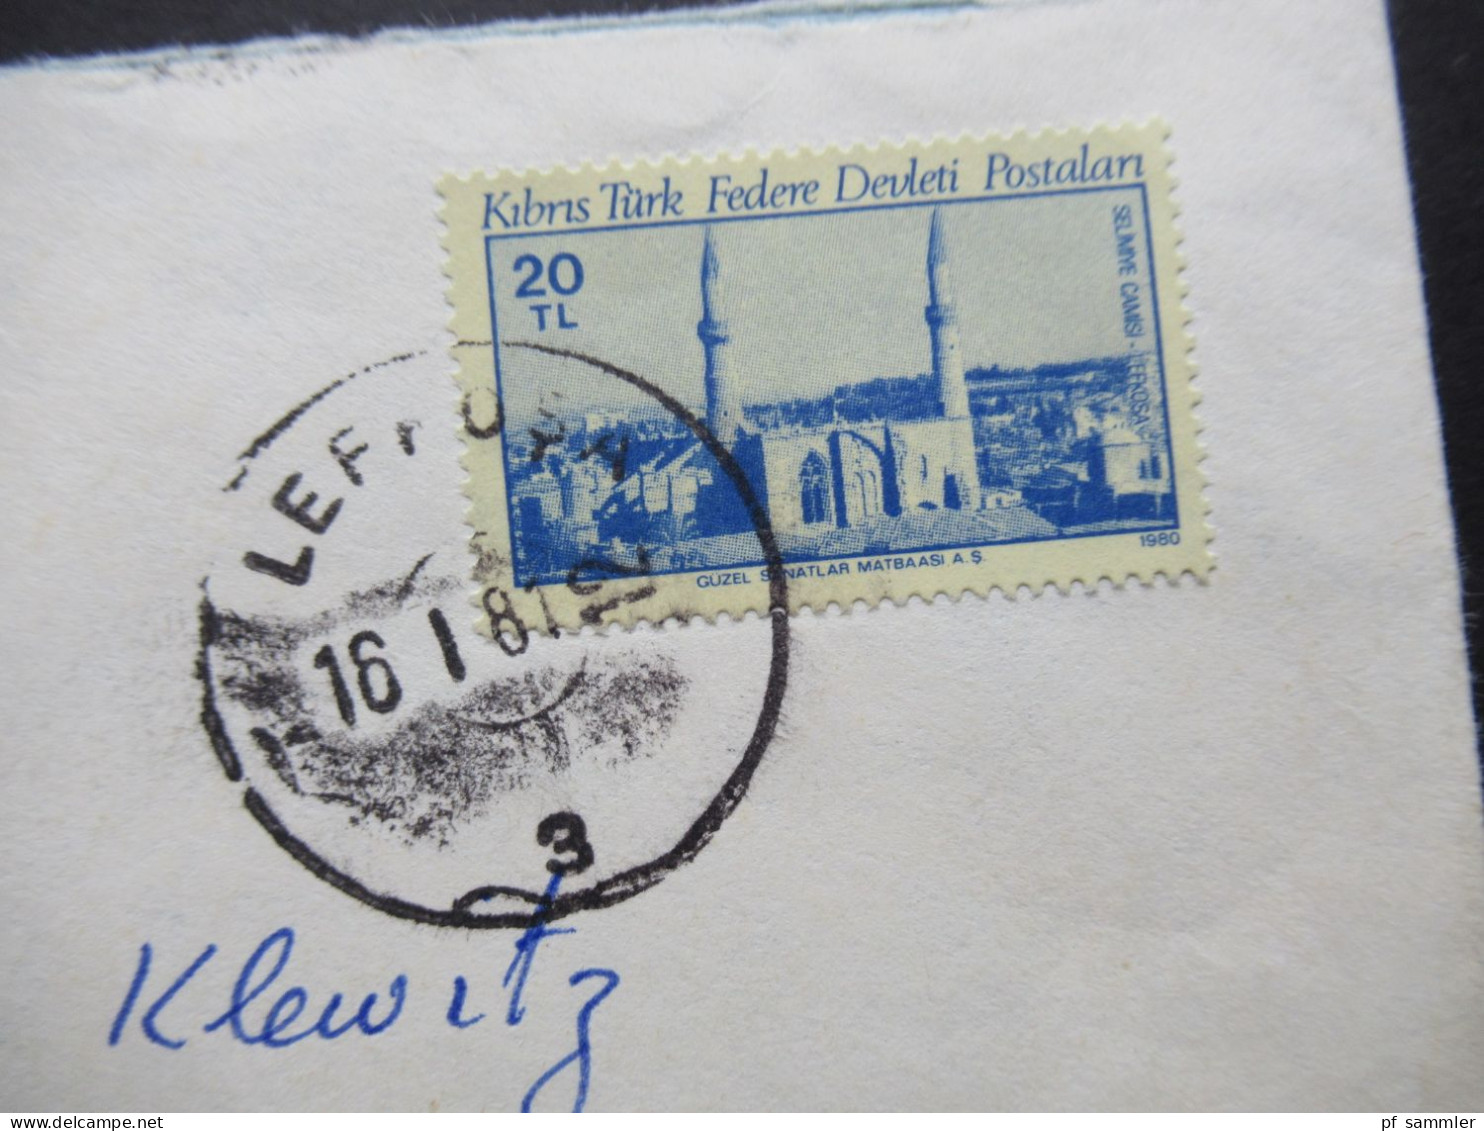 Zypern 1981 Kibris Türk Federe Devleti Postalan Stempel Lefkosa Nach Fulda Gesendet - Storia Postale